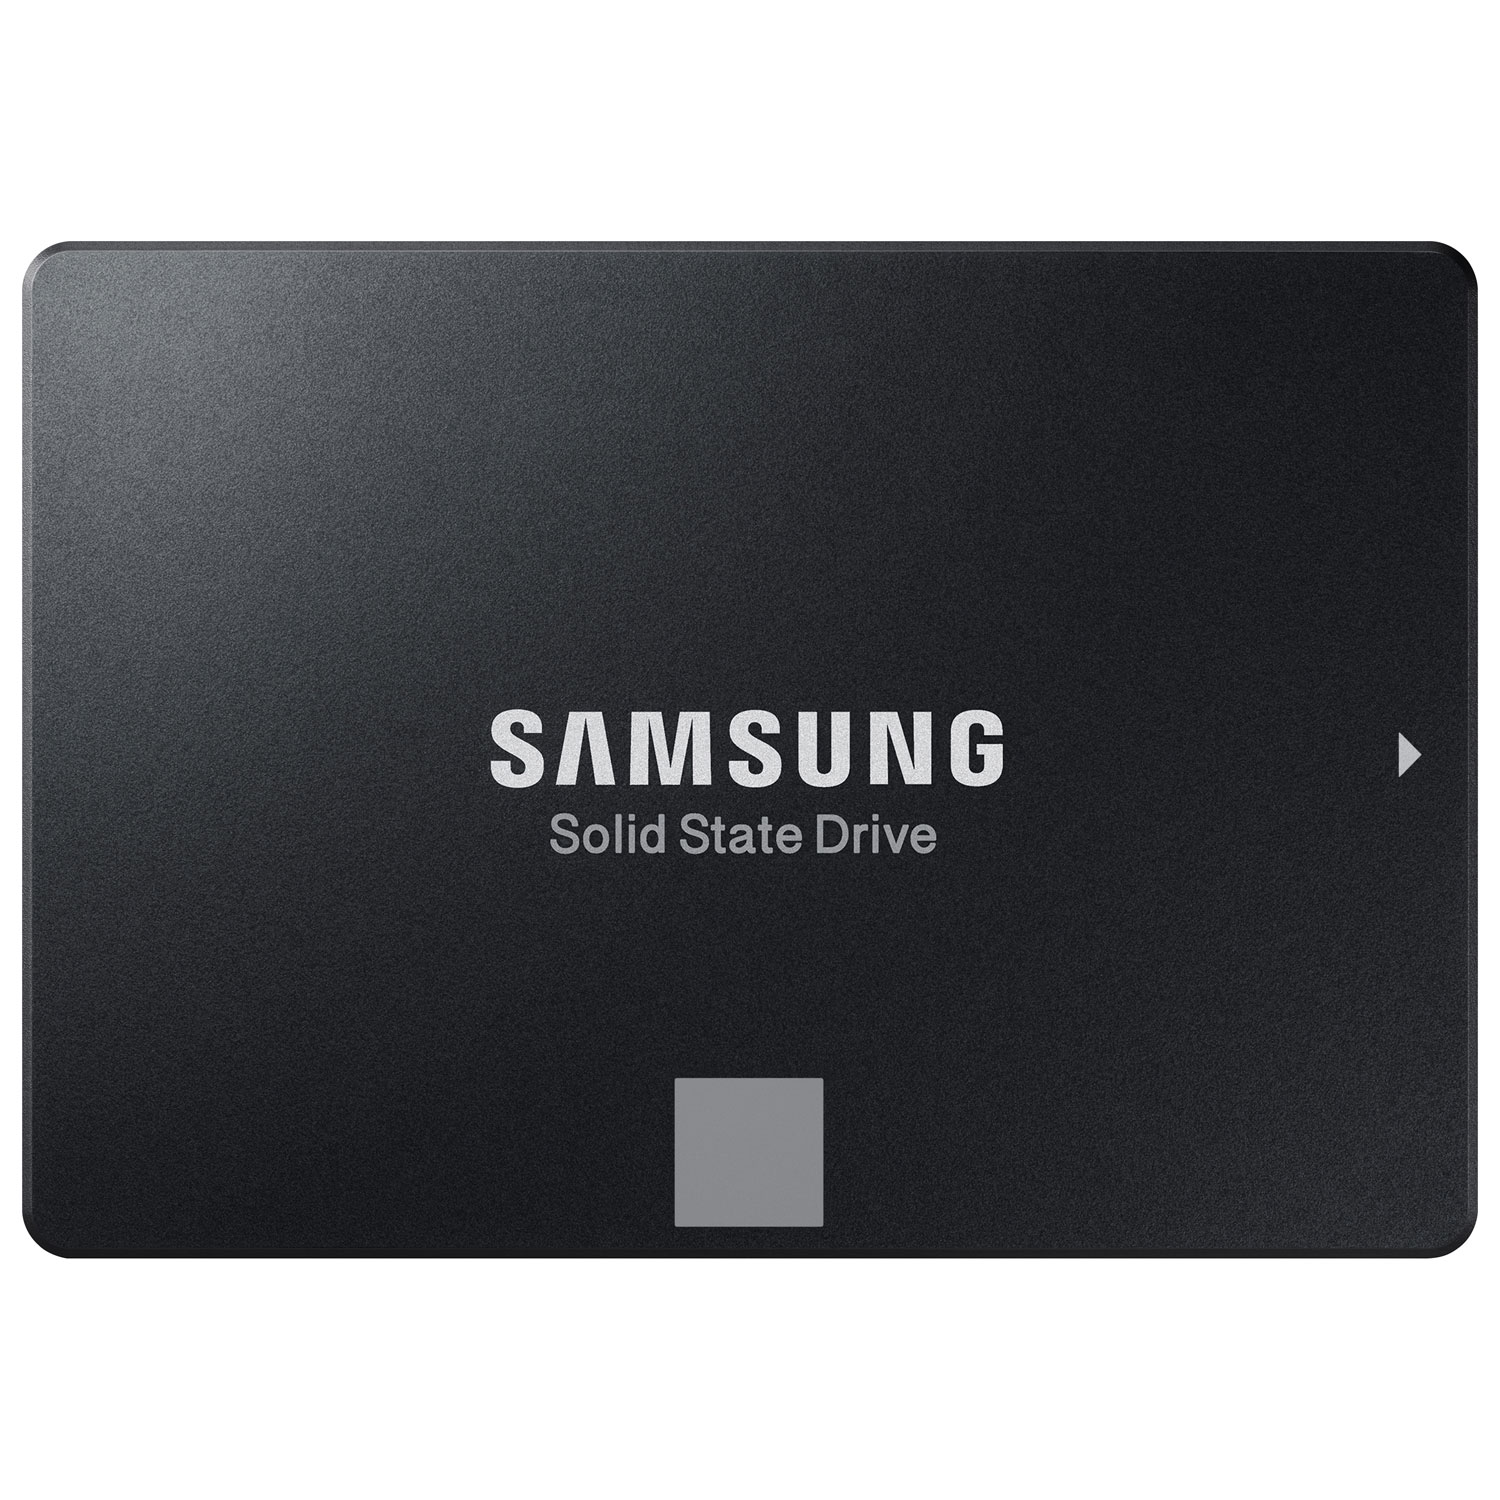 Samsung 860 EVO 500GB SATA Internal Solid State Drive (MZ-76E500B/AM)